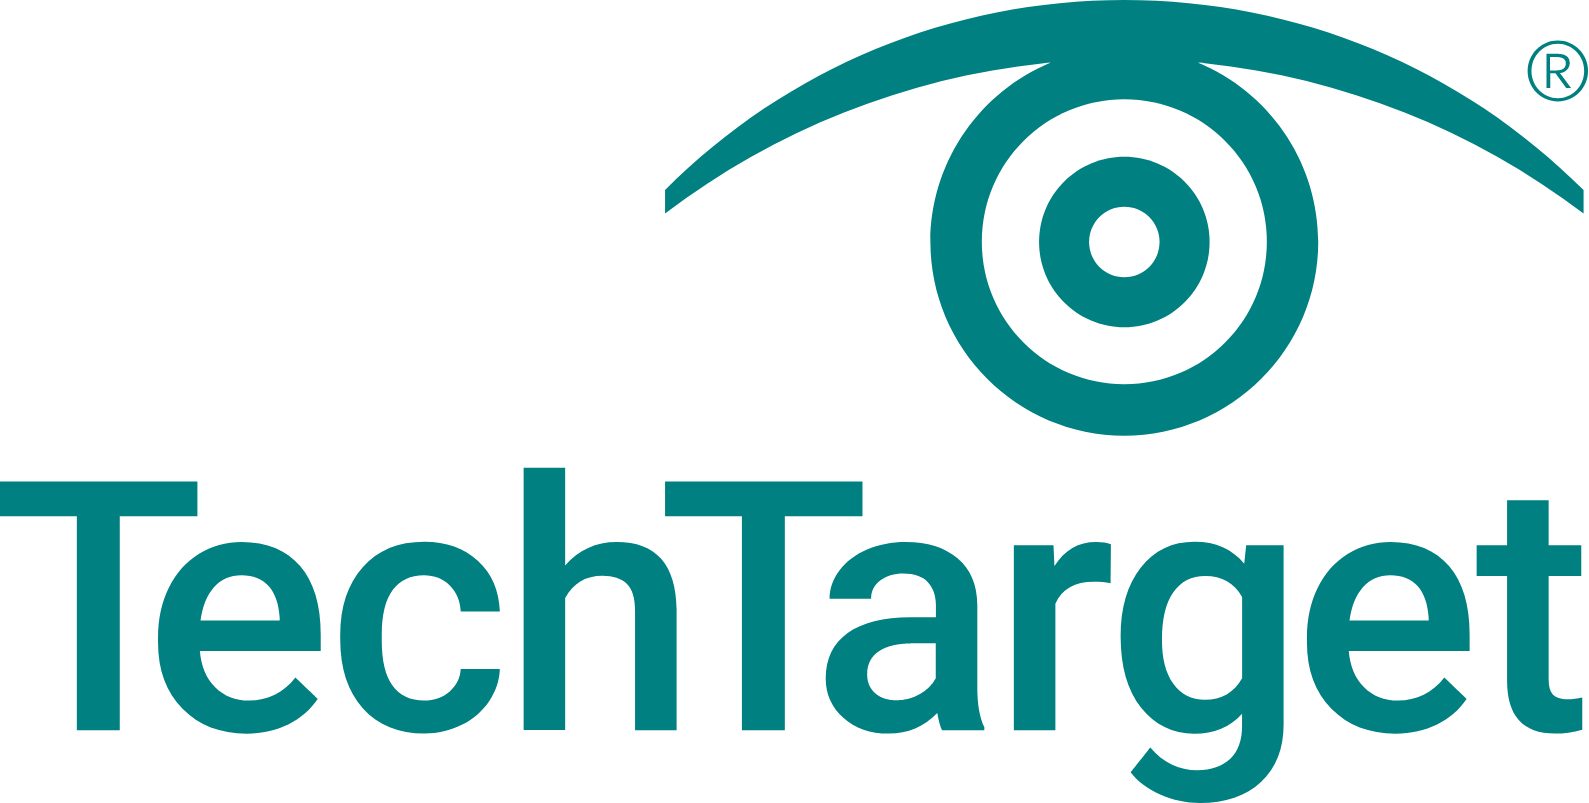 TechTarget logo large (transparent PNG)